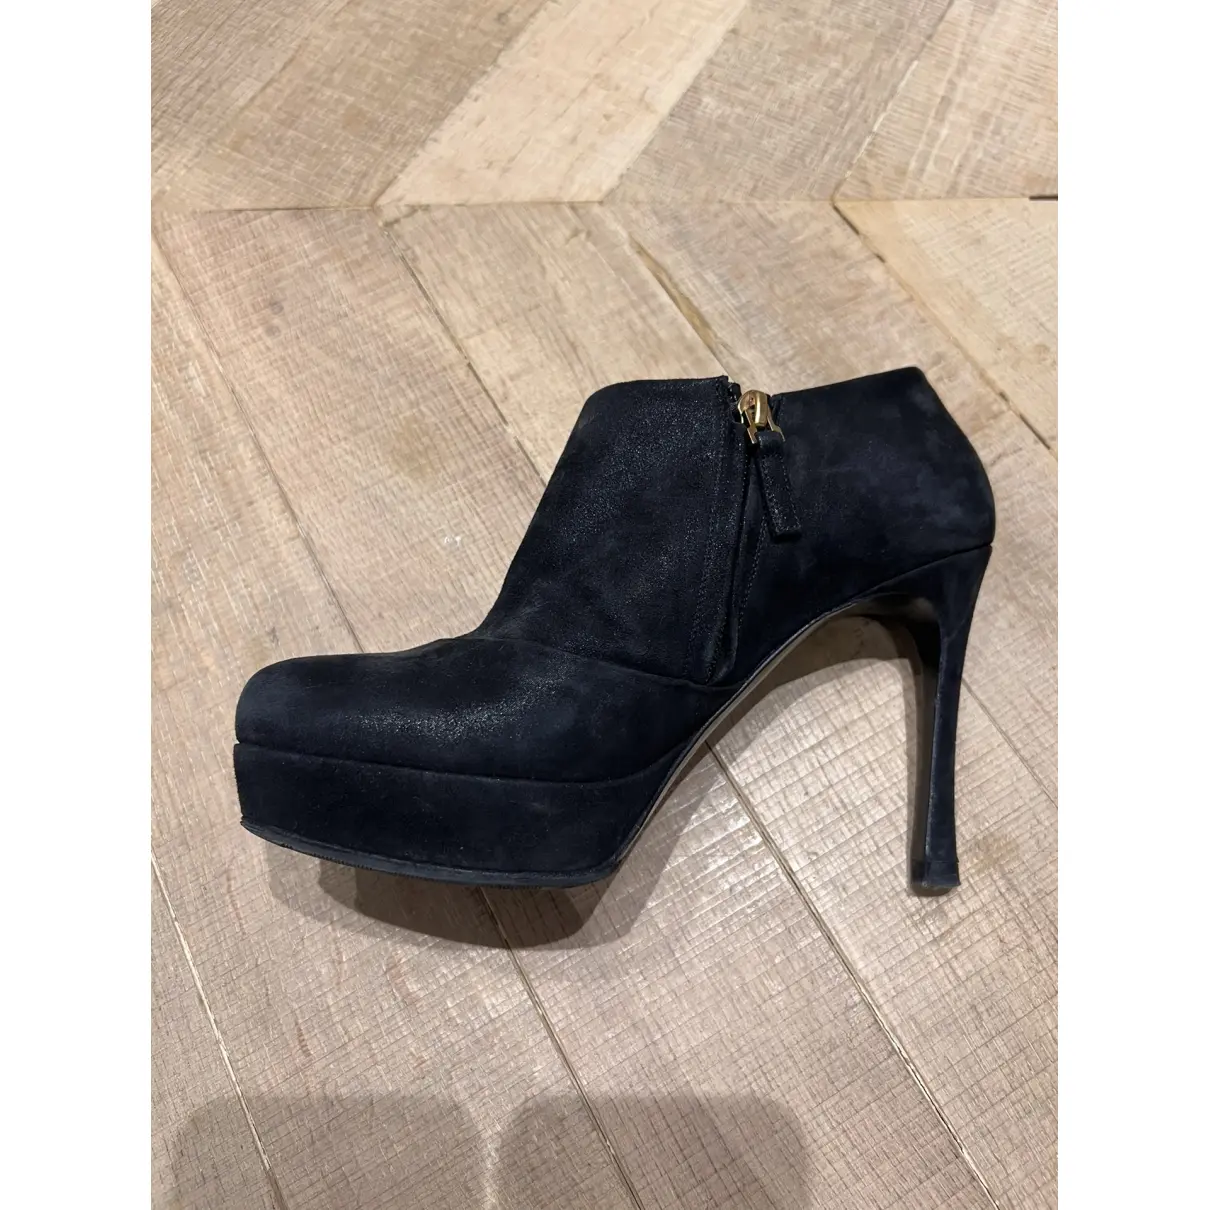 Buy Yves Saint Laurent Ankle boots online - Vintage